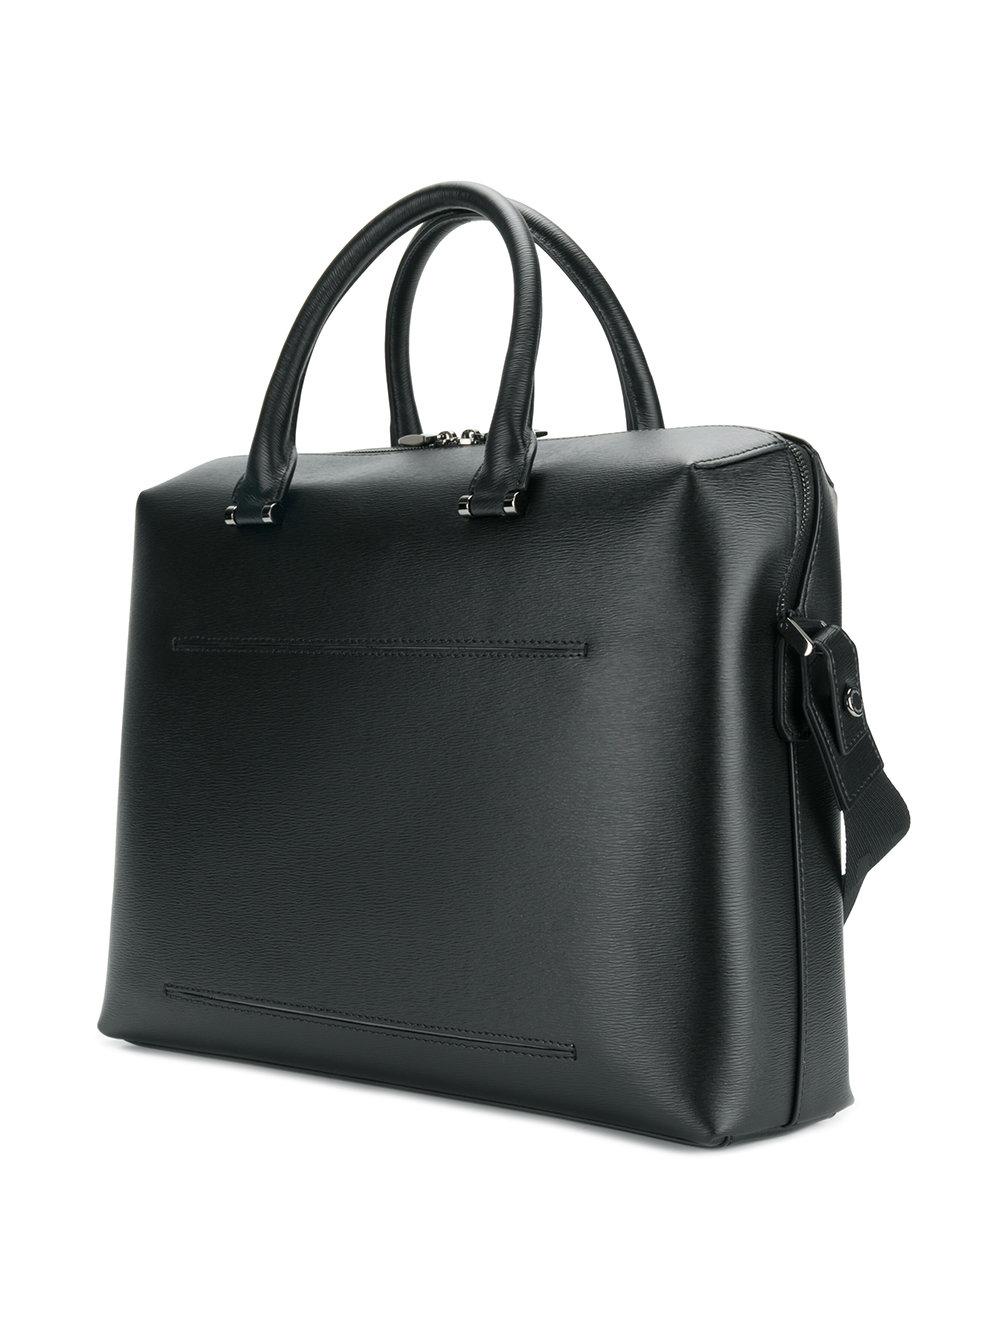 Montblanc Leather Laptop Bag in Black for Men - Lyst